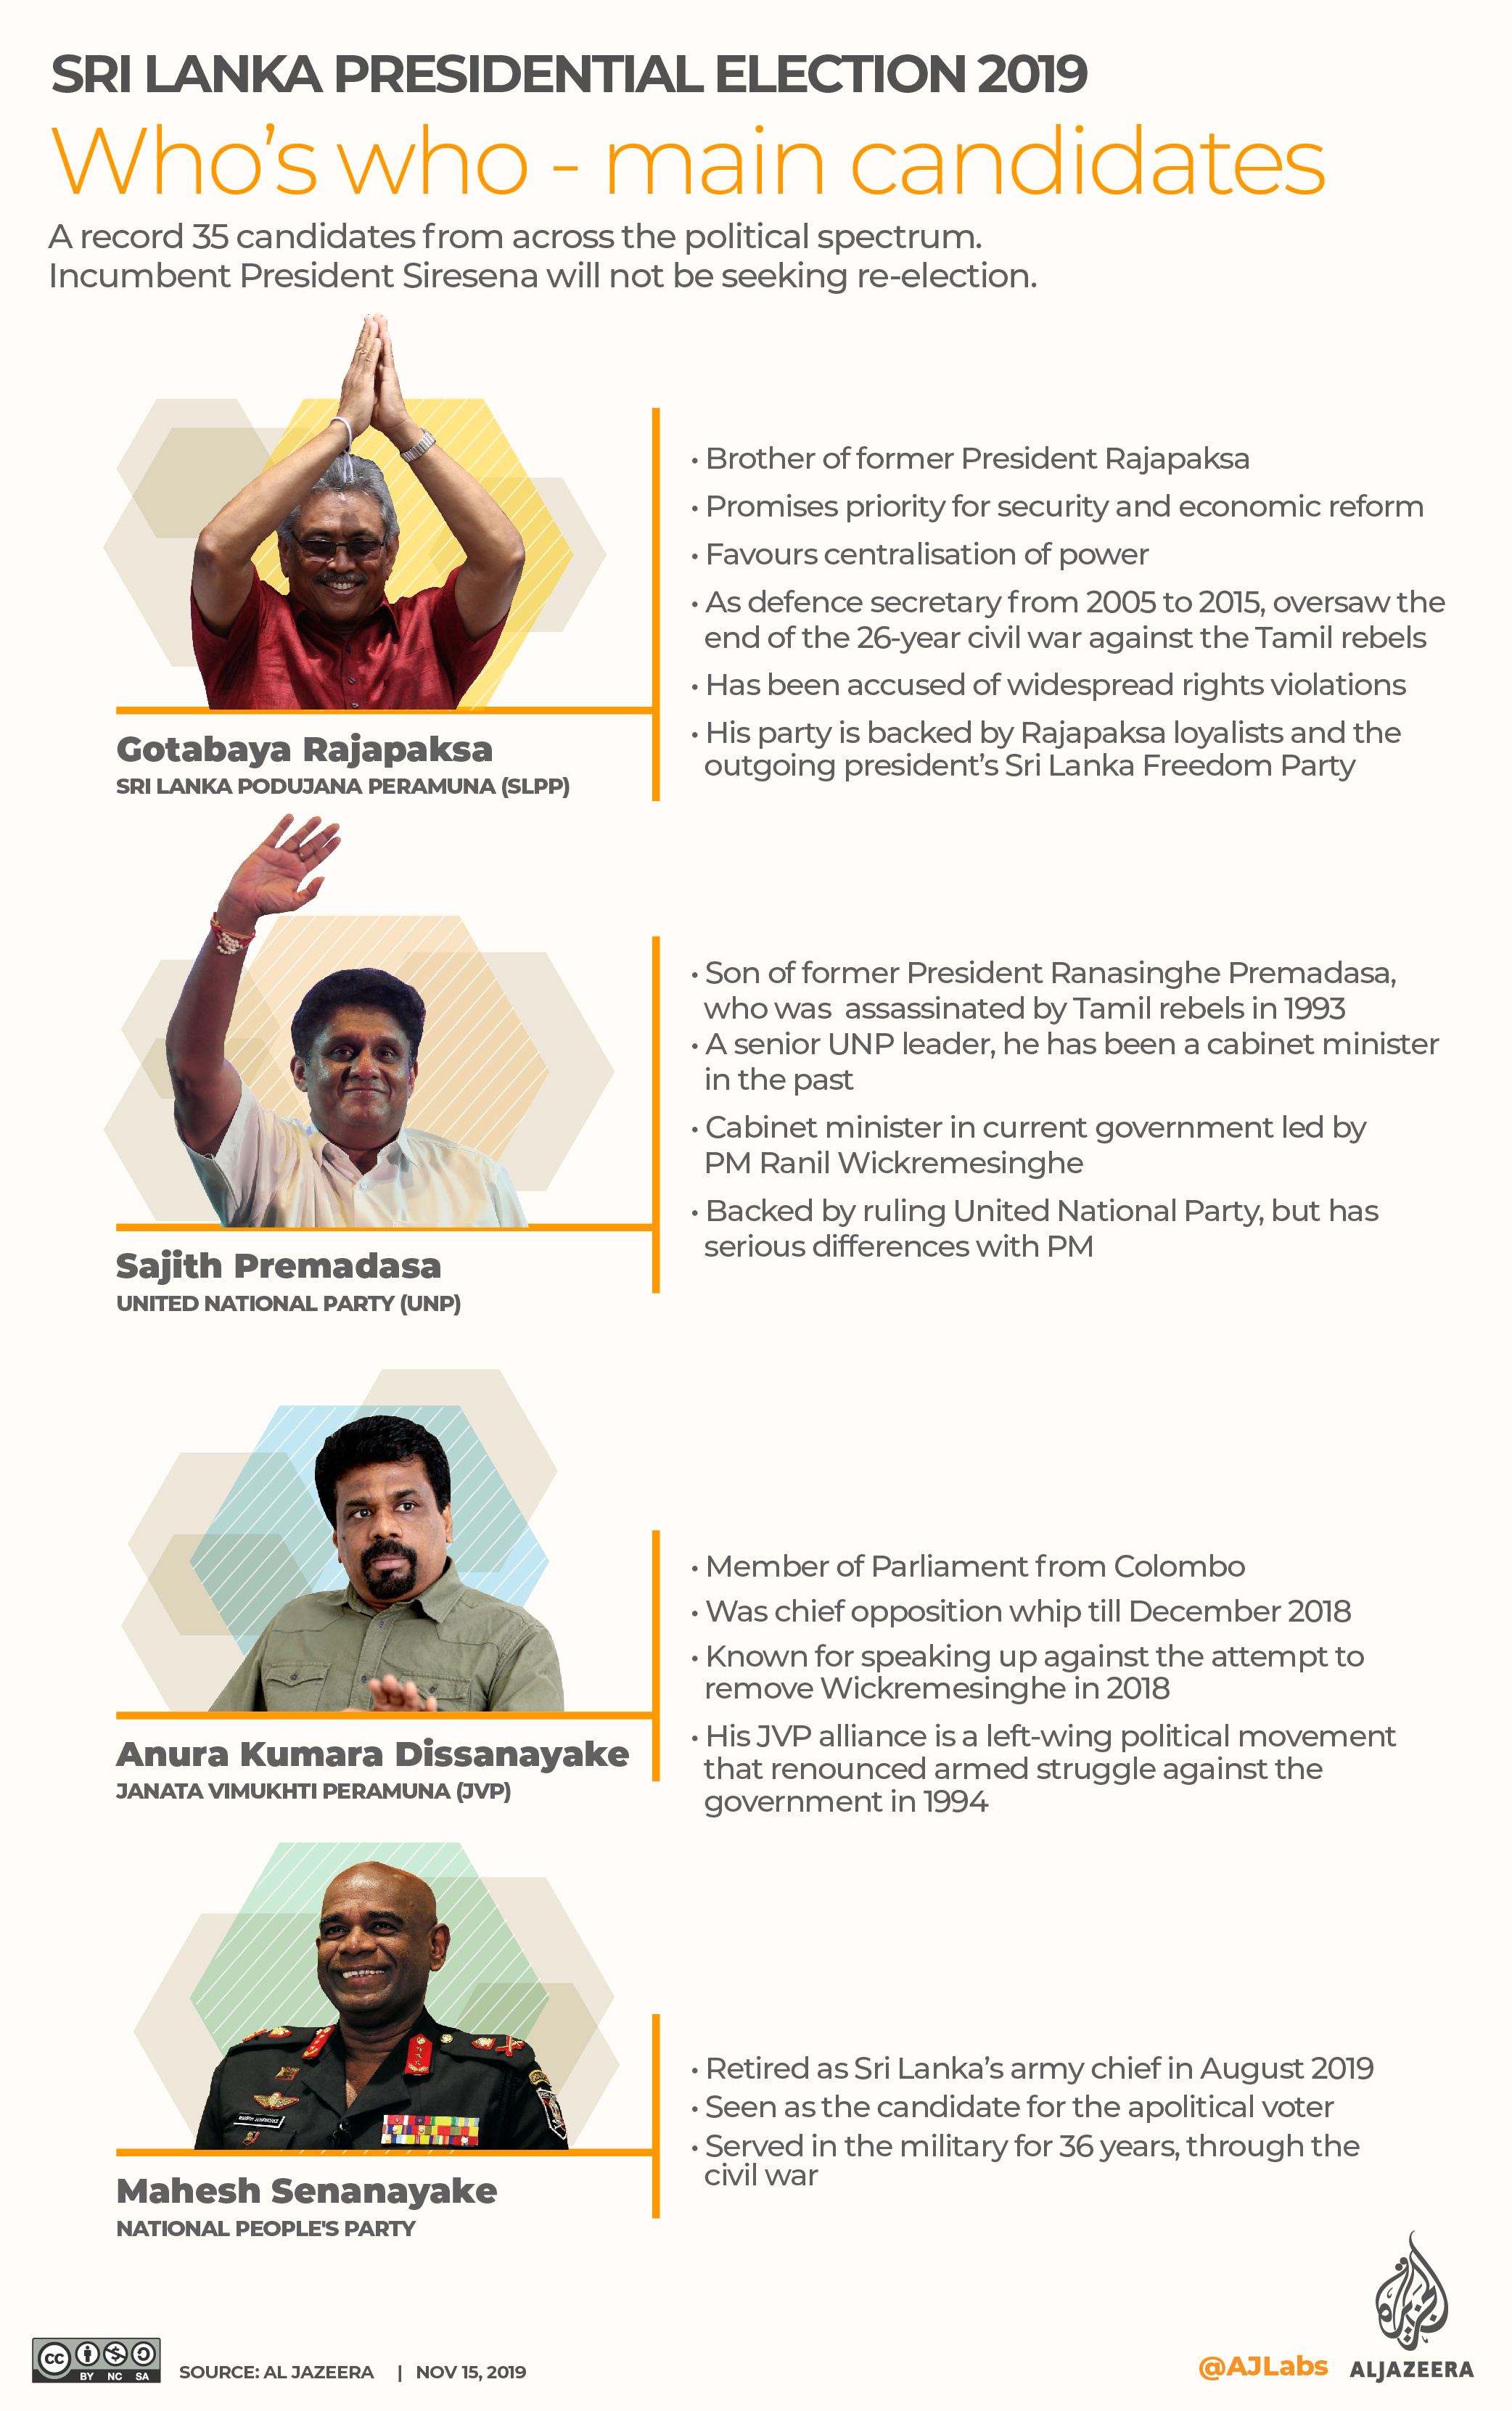 INTERACTIVE: SRI LANKA PRESIDENTIAL ELECTION 2019 - Candidates